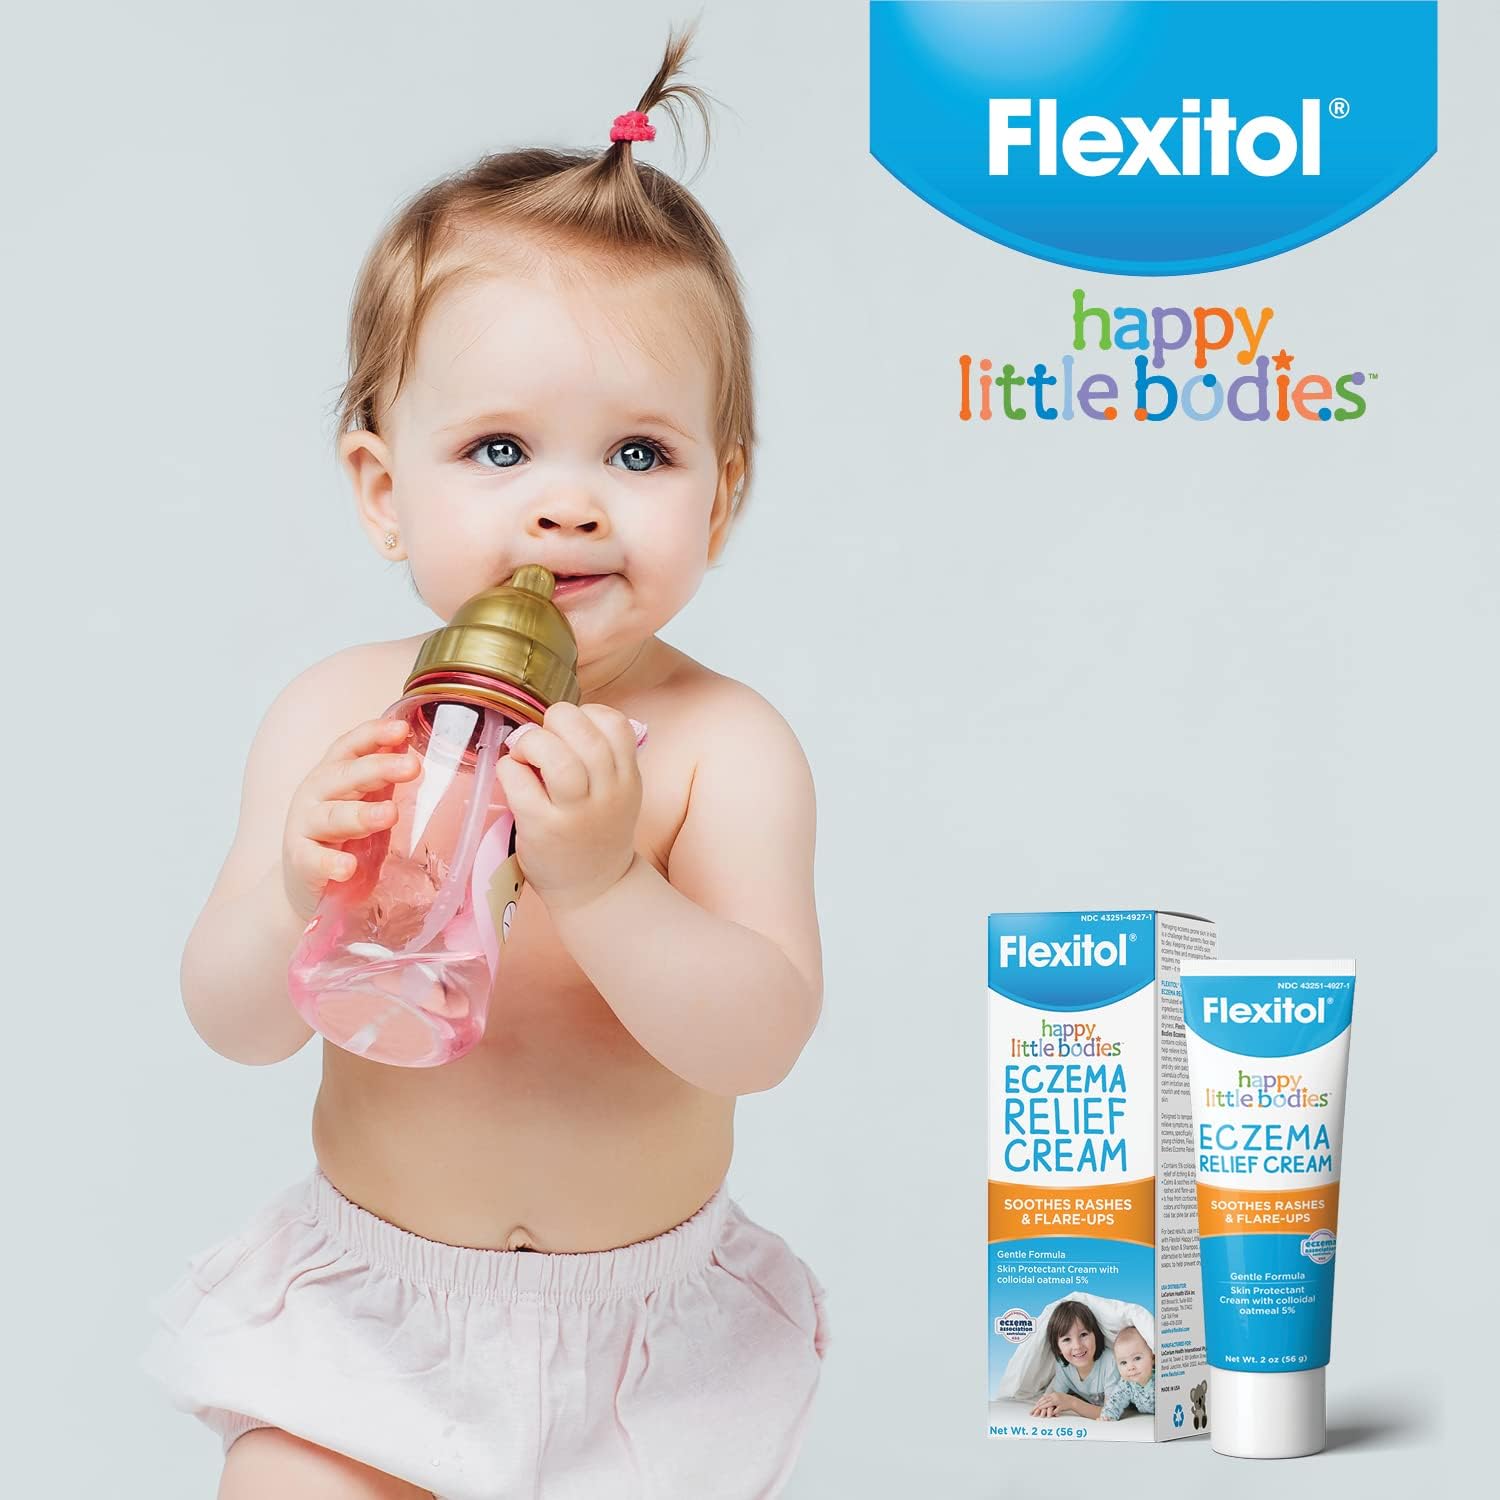 Flexitol Happy Little Bodies Eczema Relief Cream 2oz : Health & Household